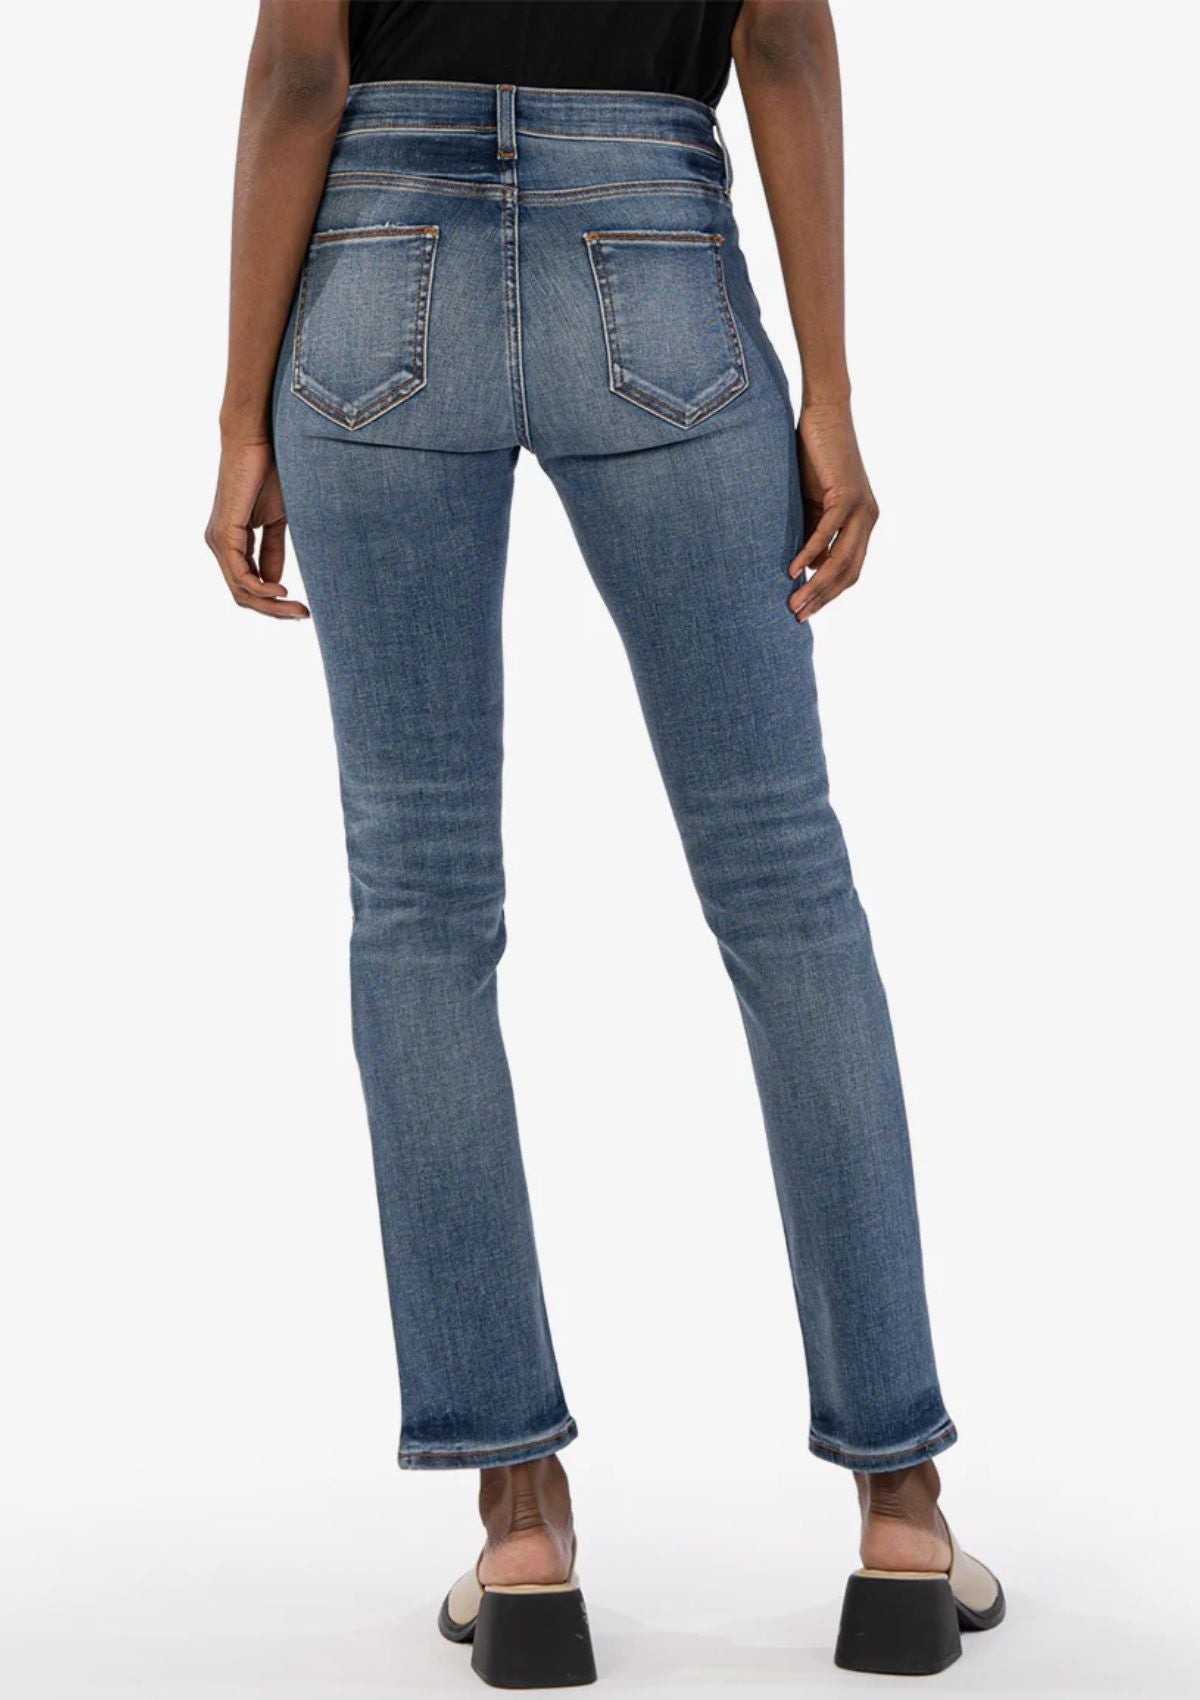 Clothing-Fashion-Jeans-Ruby Jane.